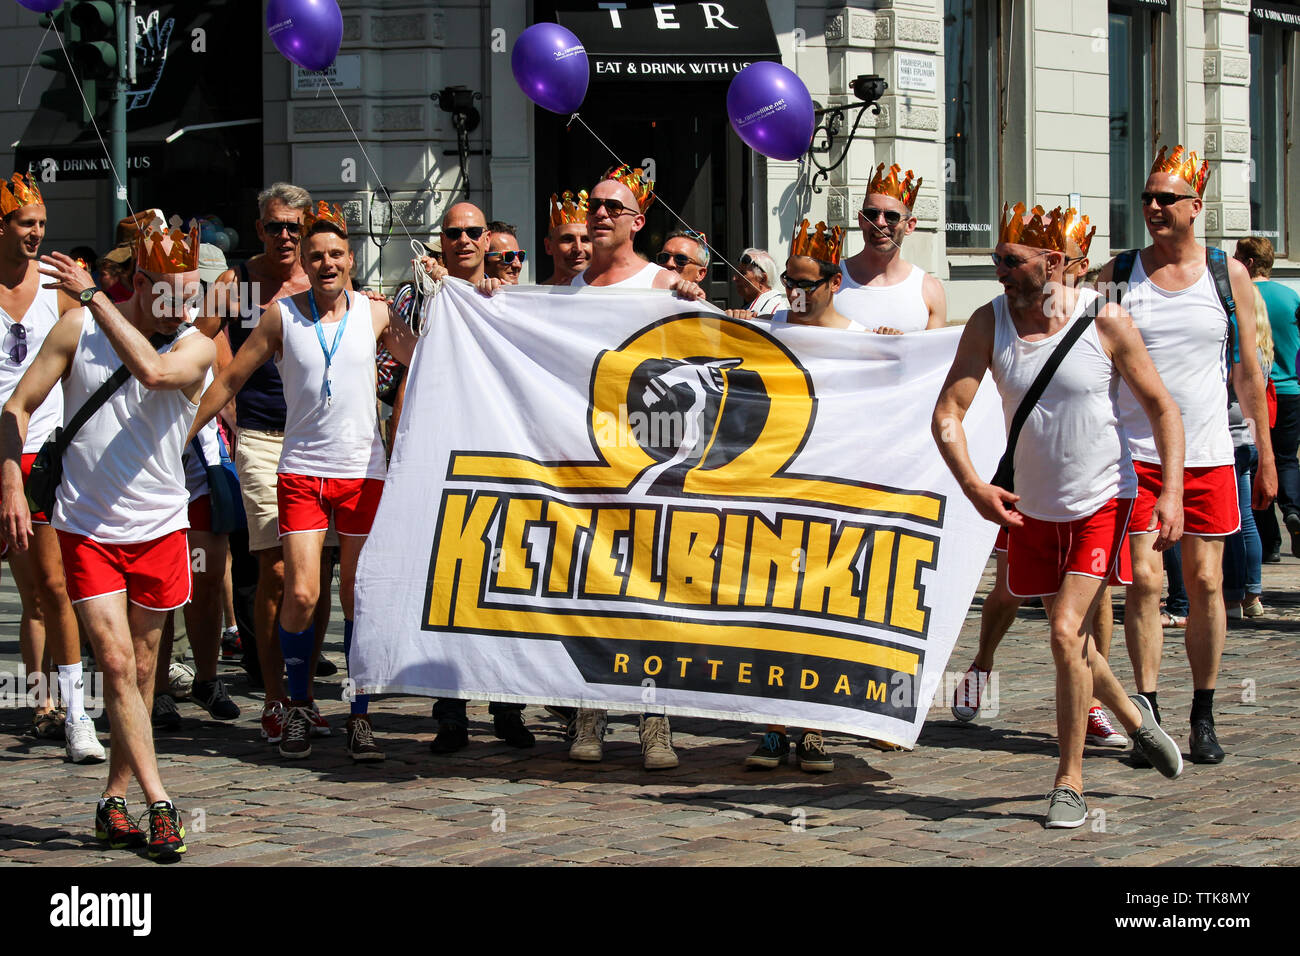 Men wearing cardboard crowns holding LGBT sports club Ketelbinkie Rotterdam banner at Helsinki Pride Parade 2016 in Helsinki, Finland Stock Photo